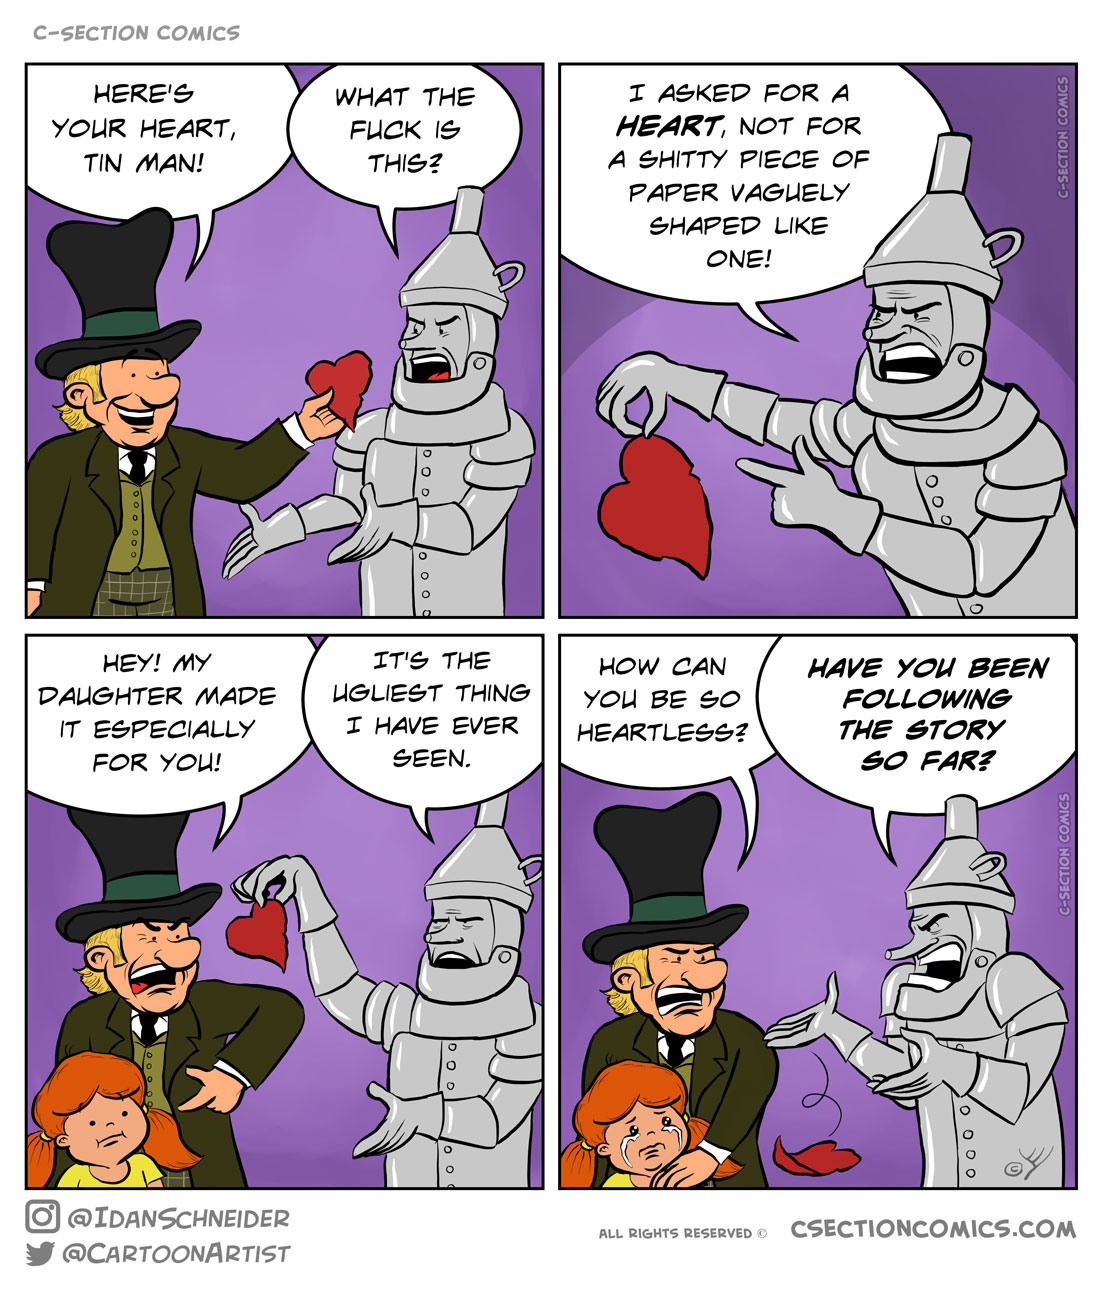 Tin Man Heart - by C-Section Comics